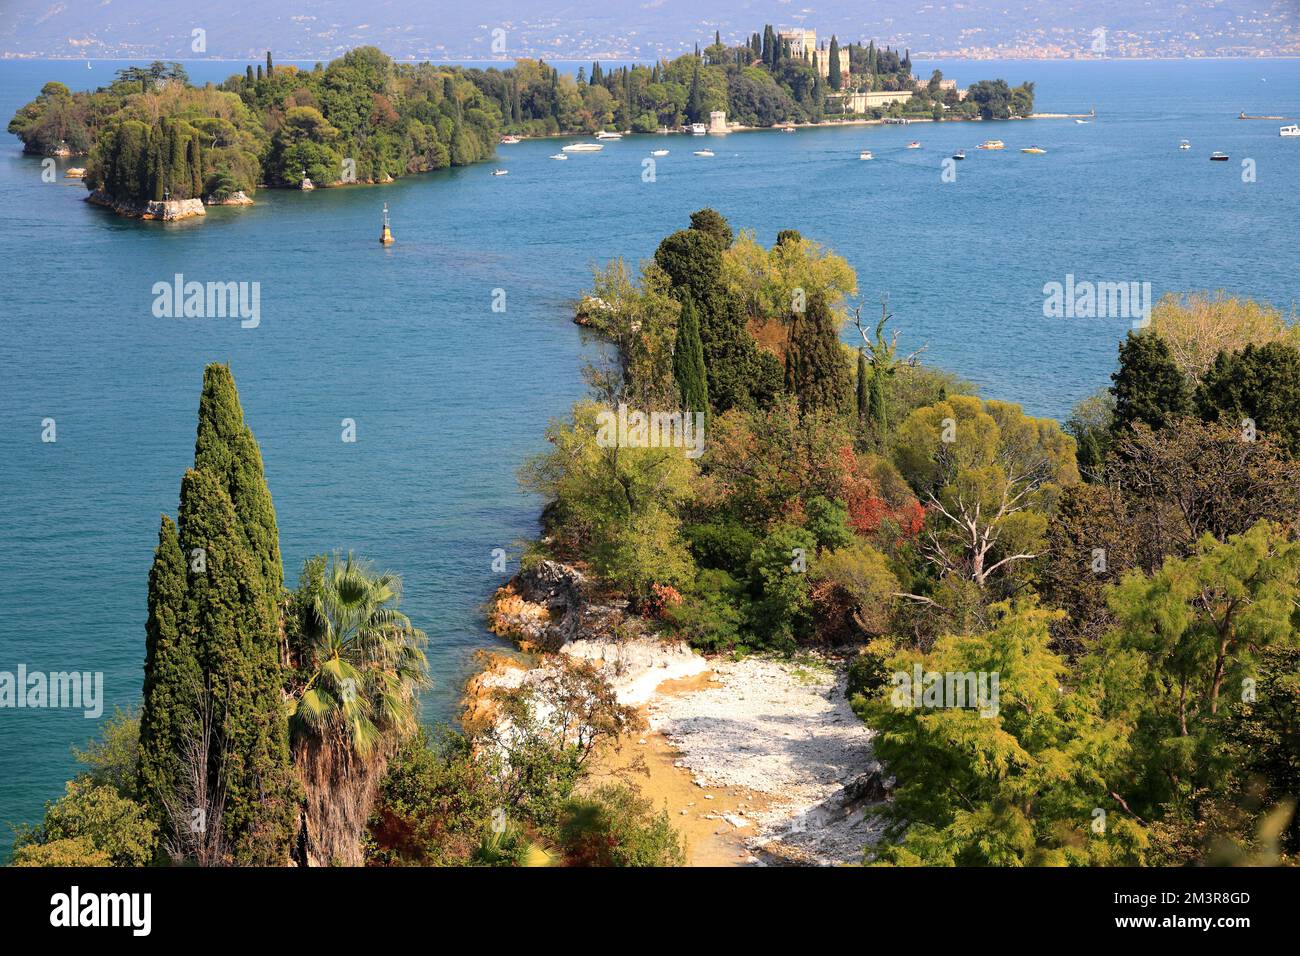 View from San Fermo to Island Garda (Isola del Garda). Italy, Europe. Stock Photo